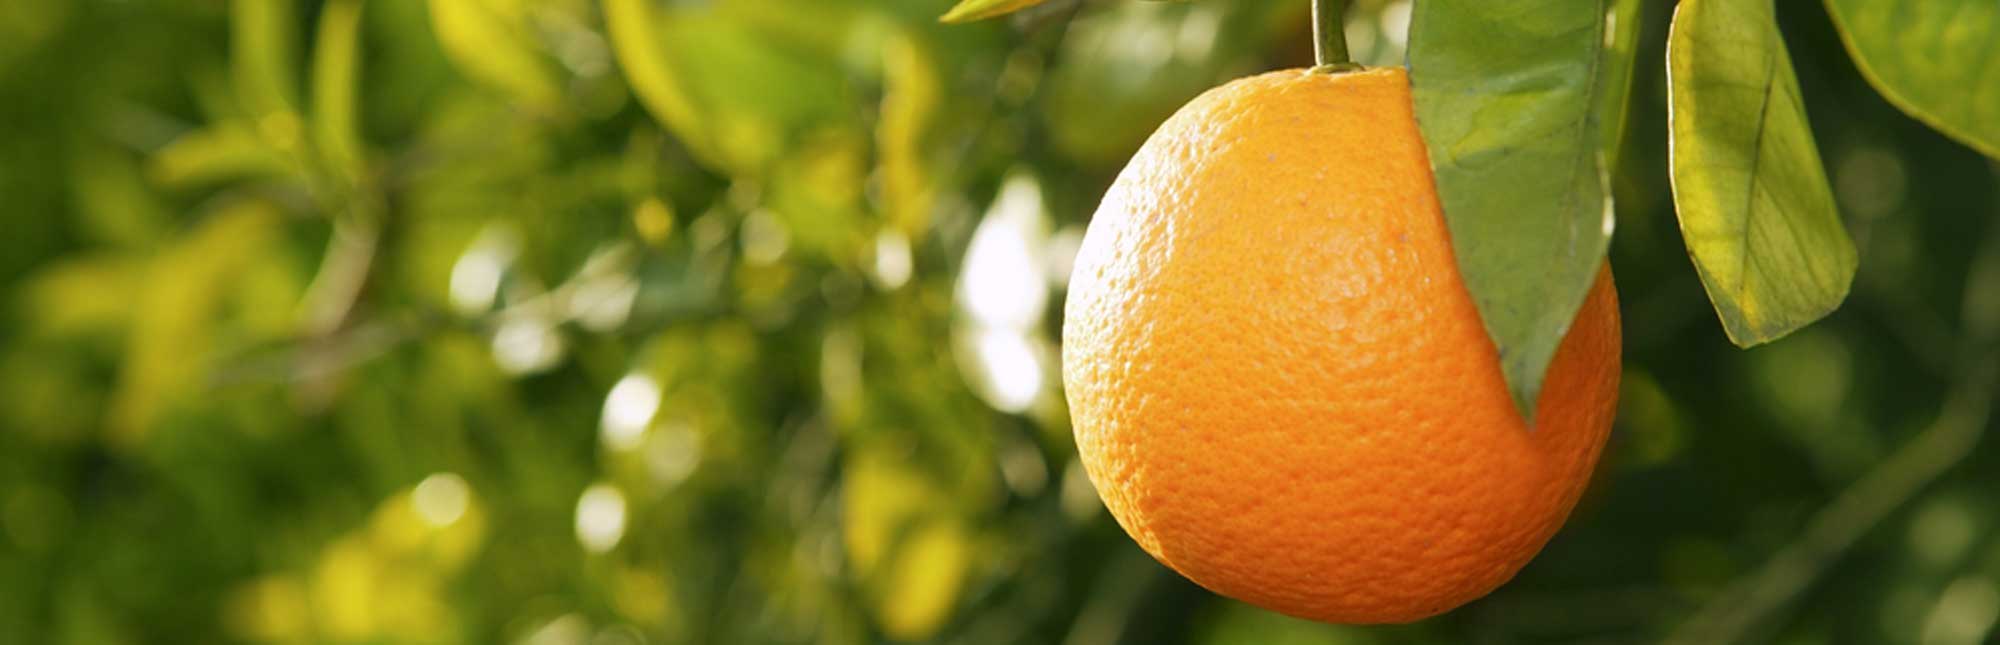 an orange citrus fruit growing on a tree